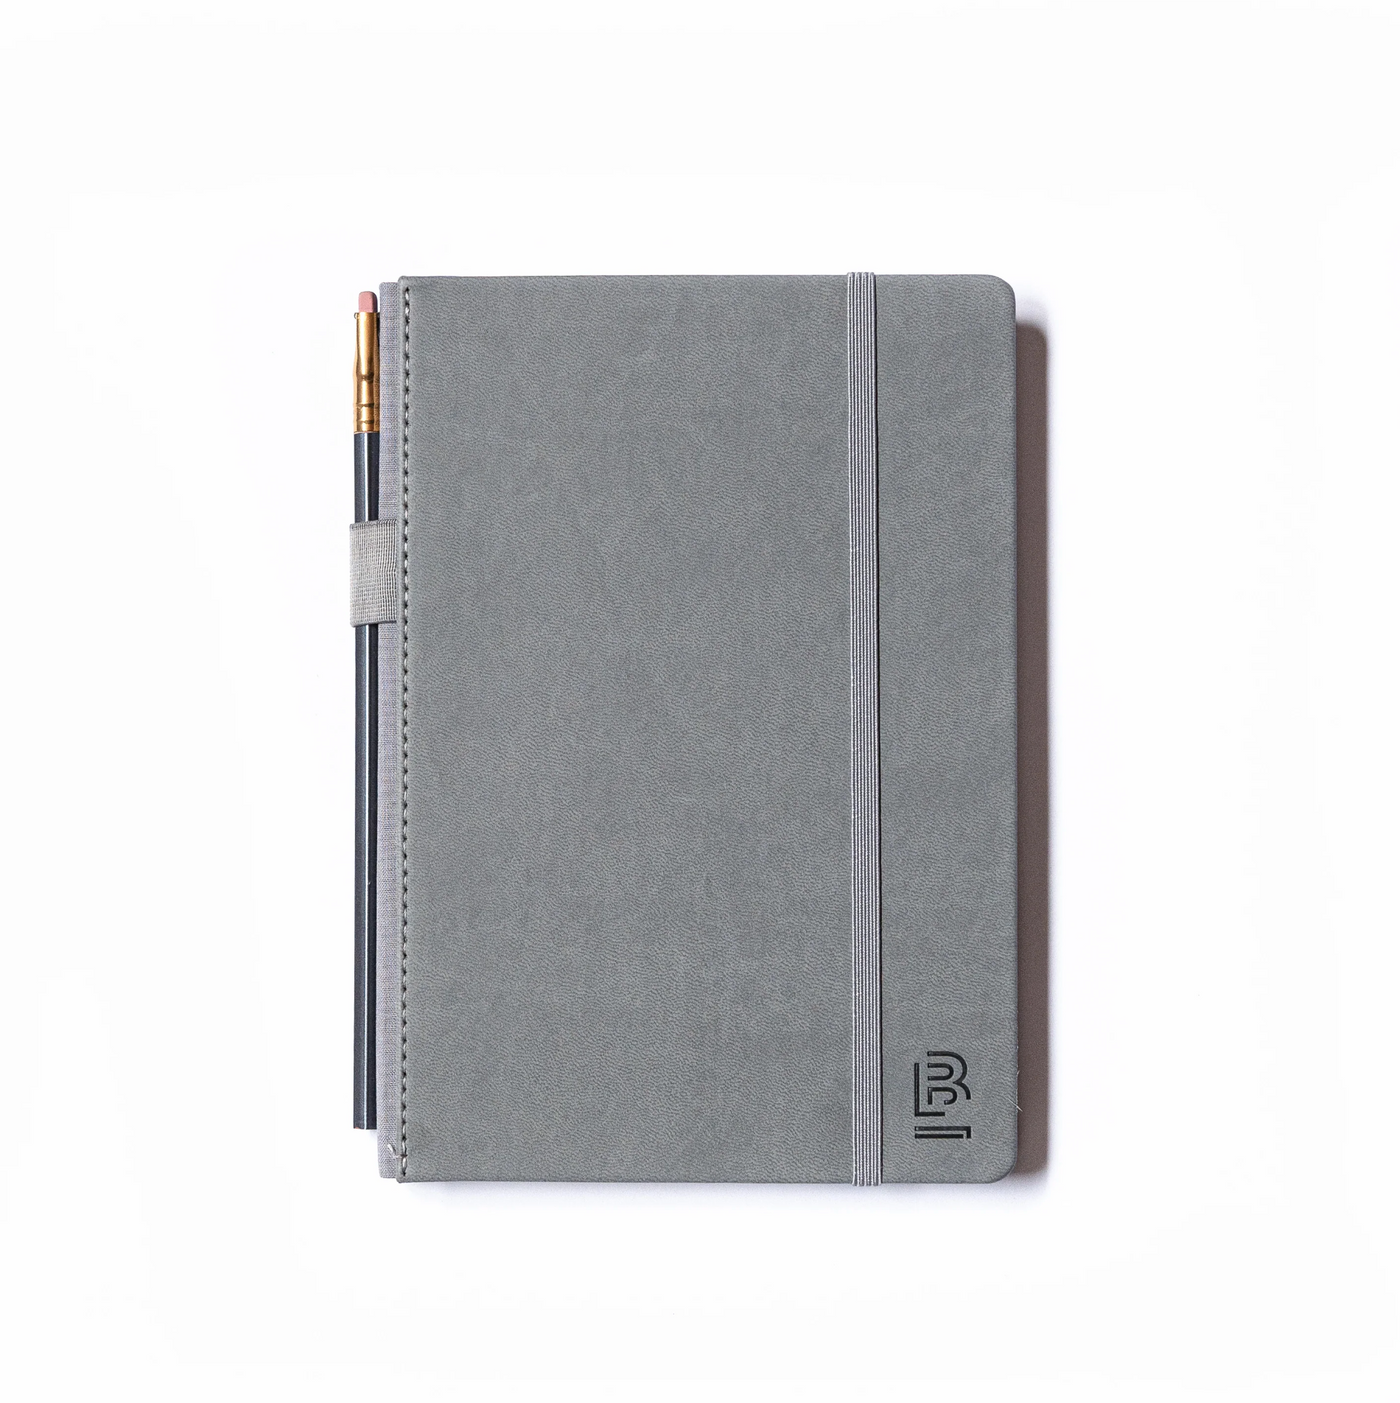 Medium Graph Blackwing Slate Notebook - Gray